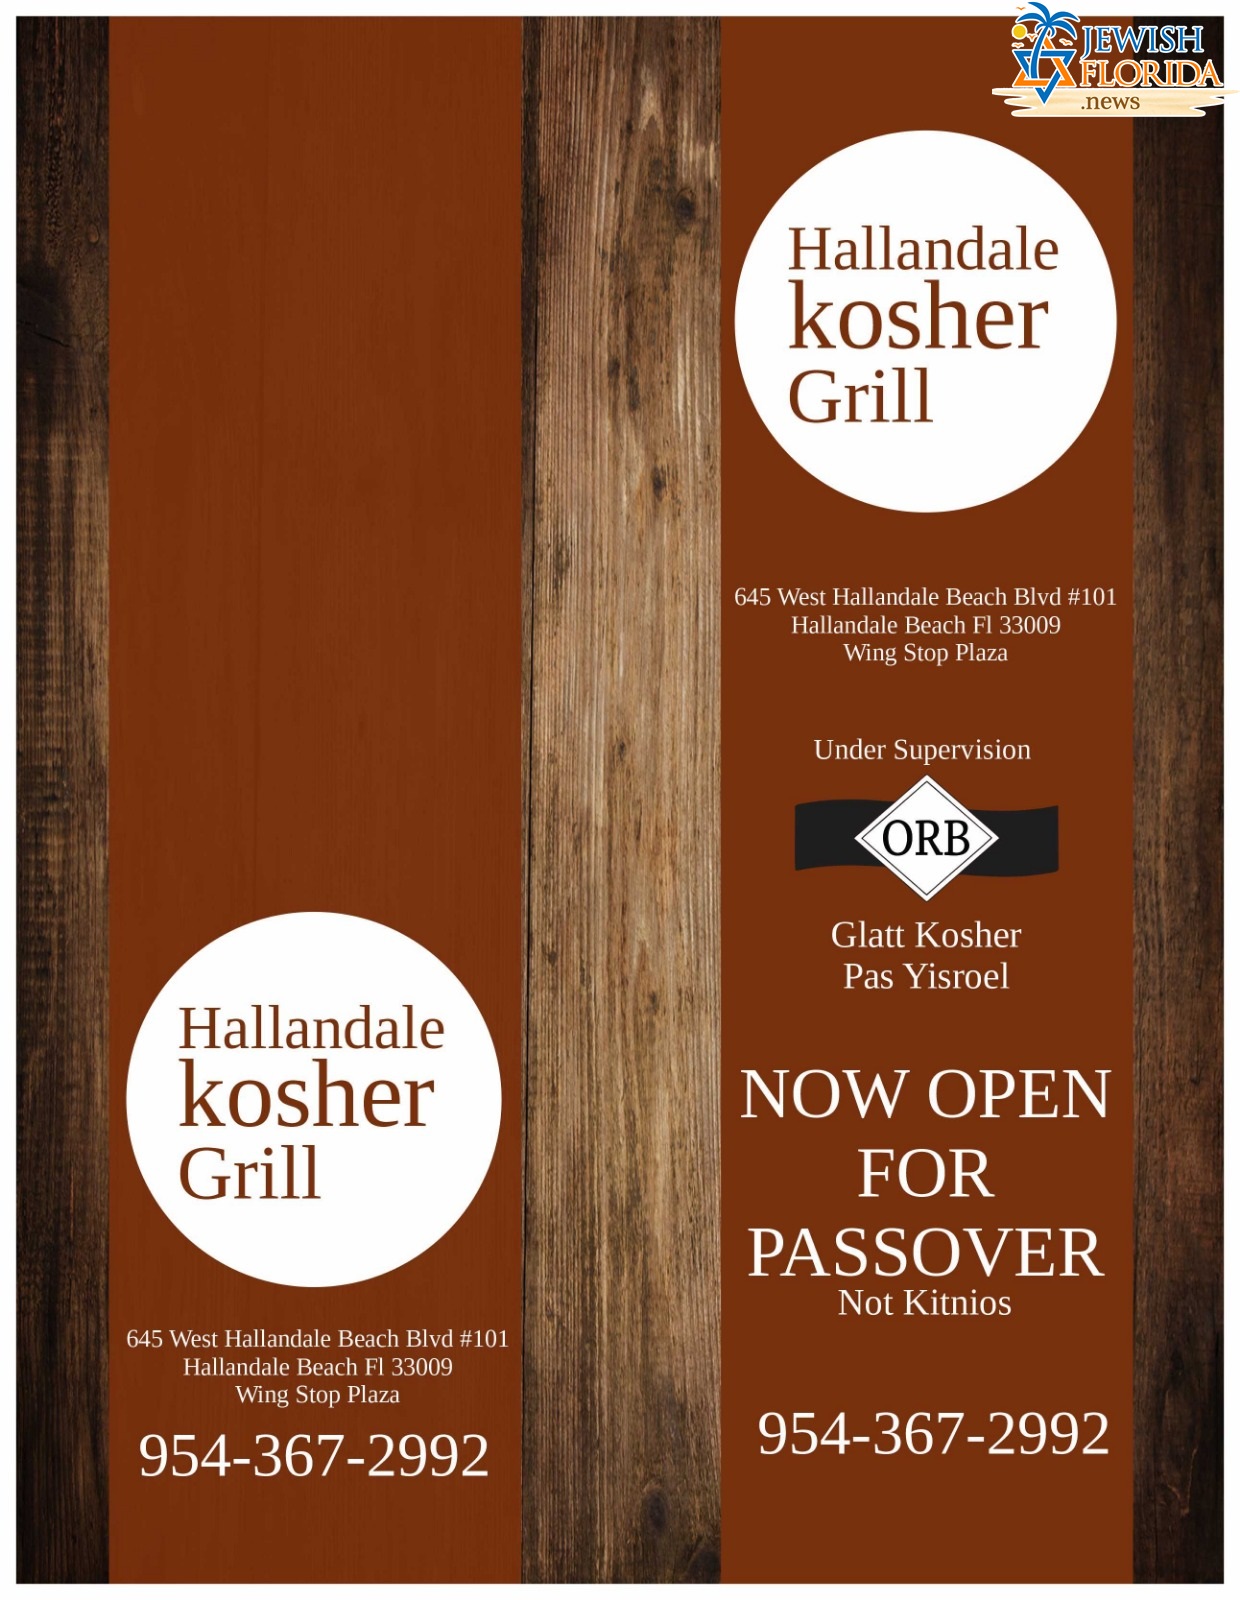 Passover Restaurant Opens Wednesday!